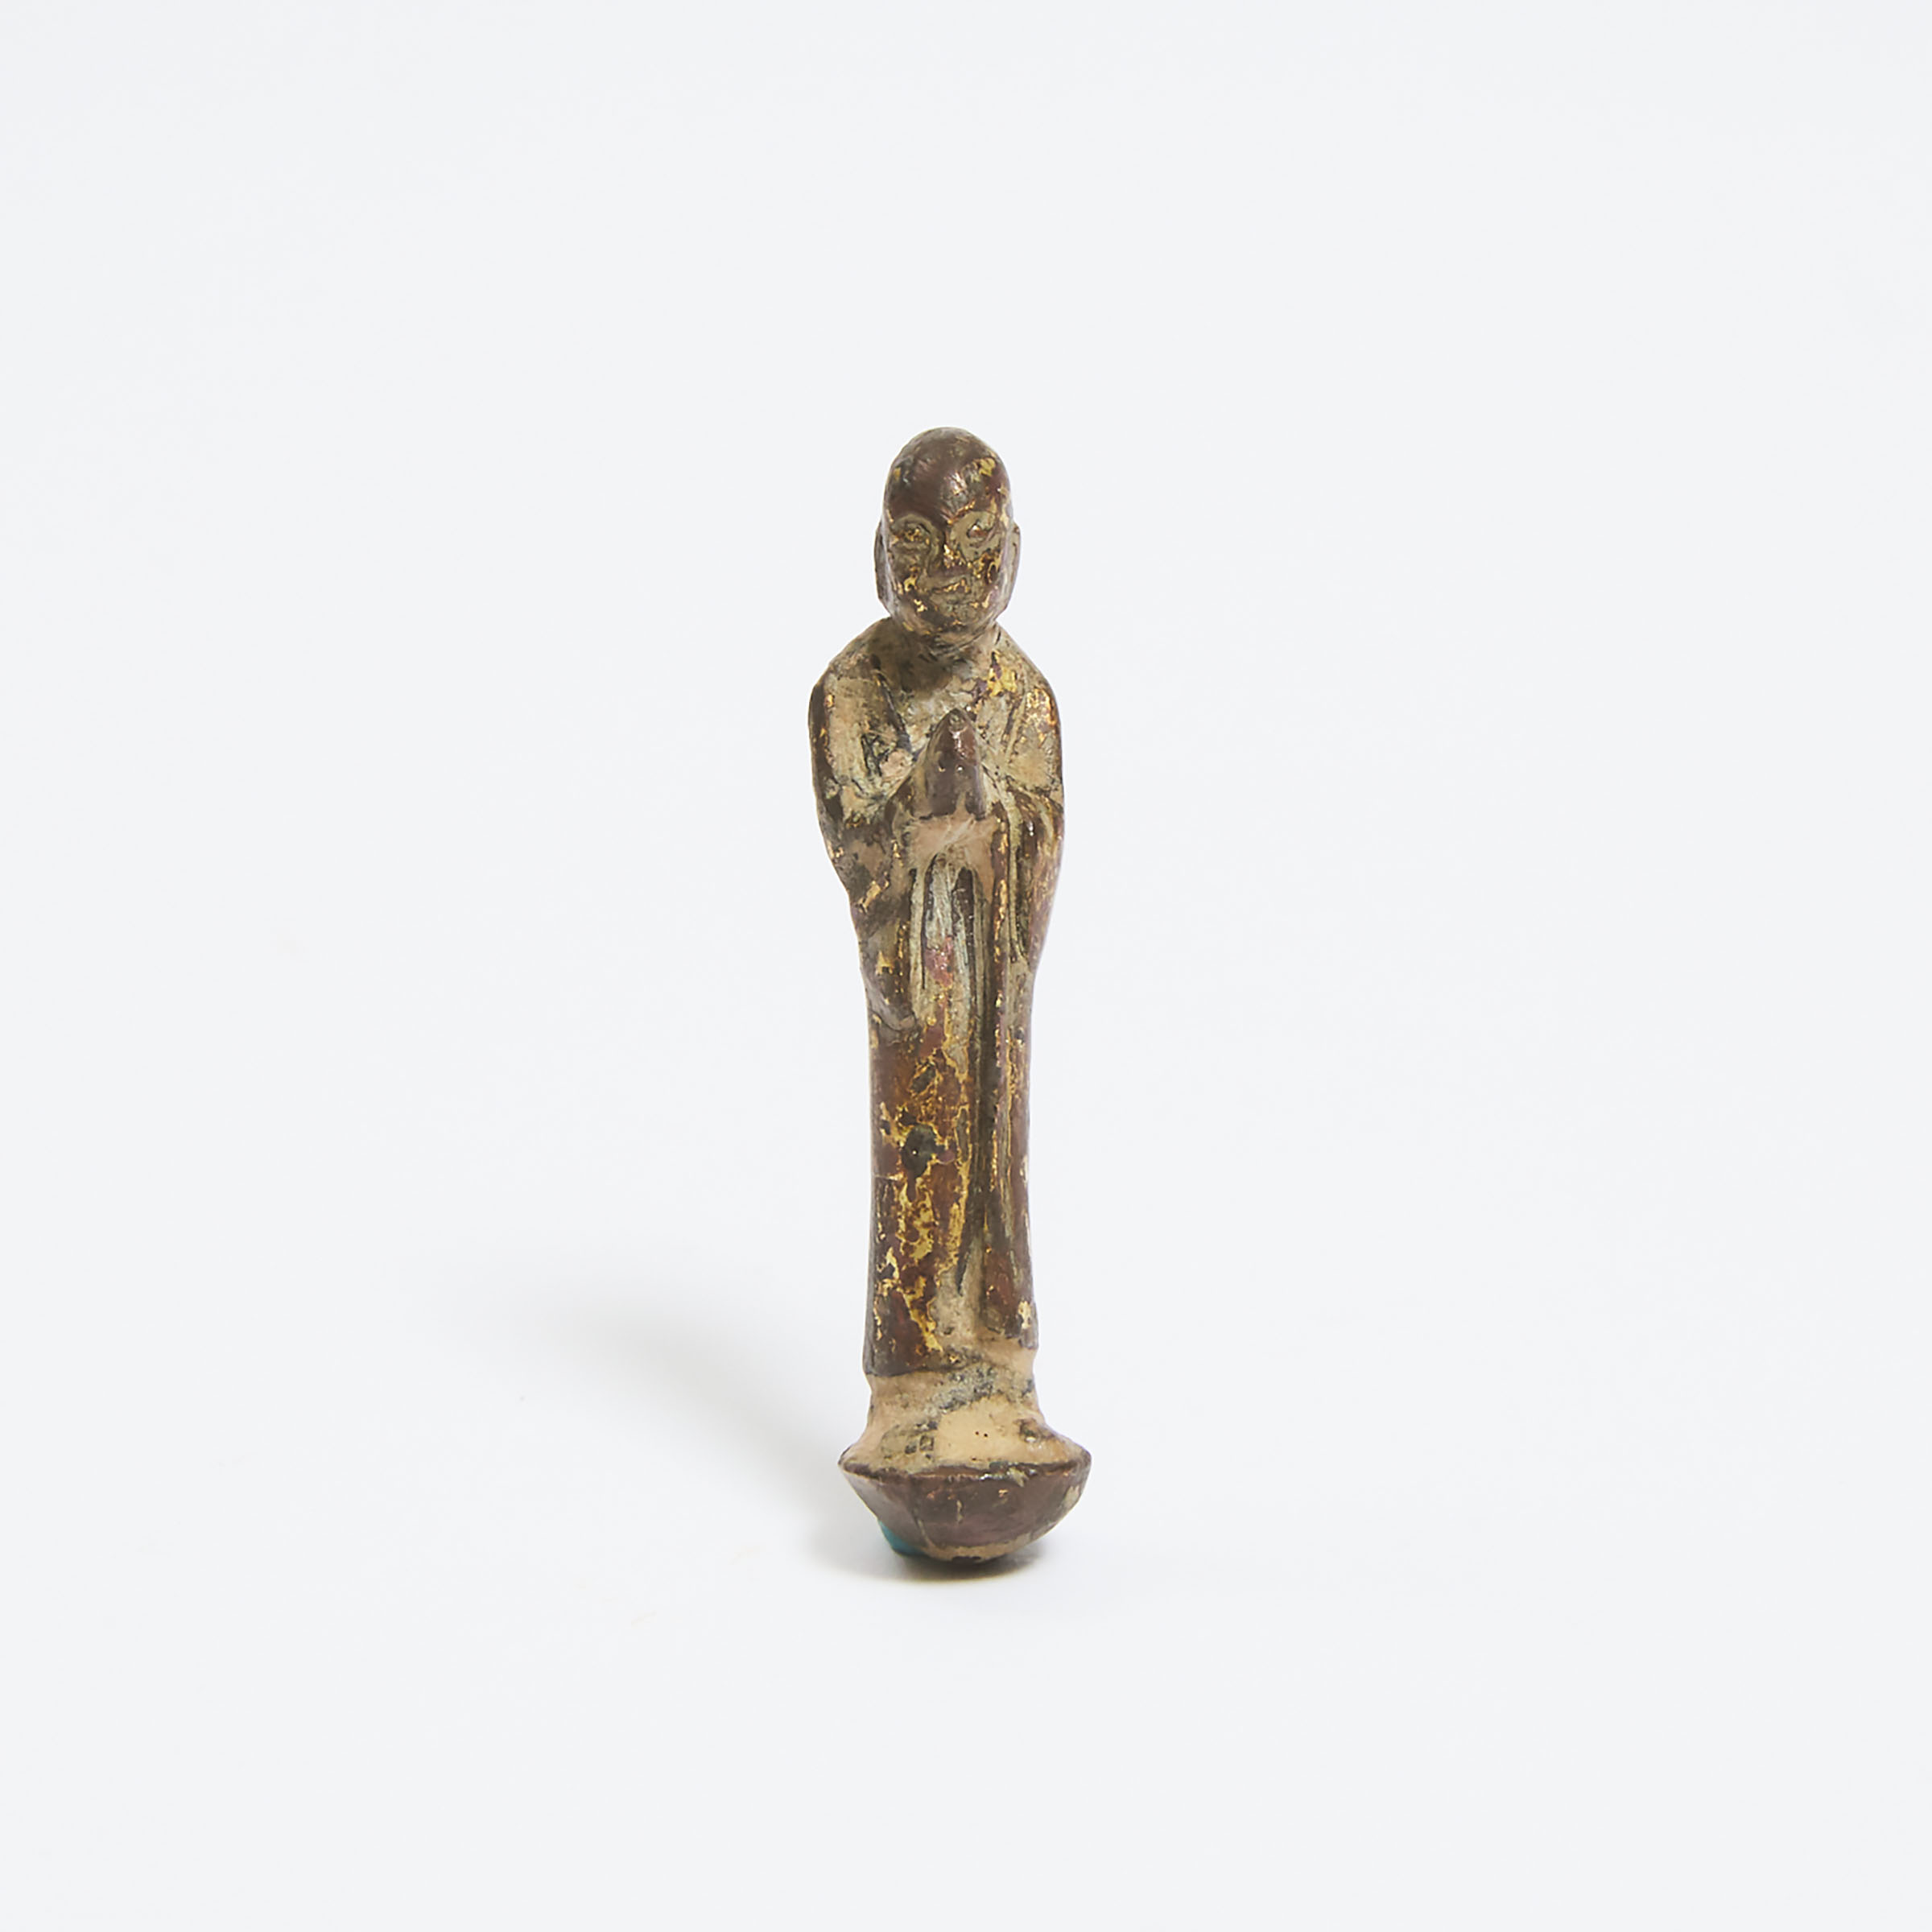 A Miniature Gilt Bronze Figure